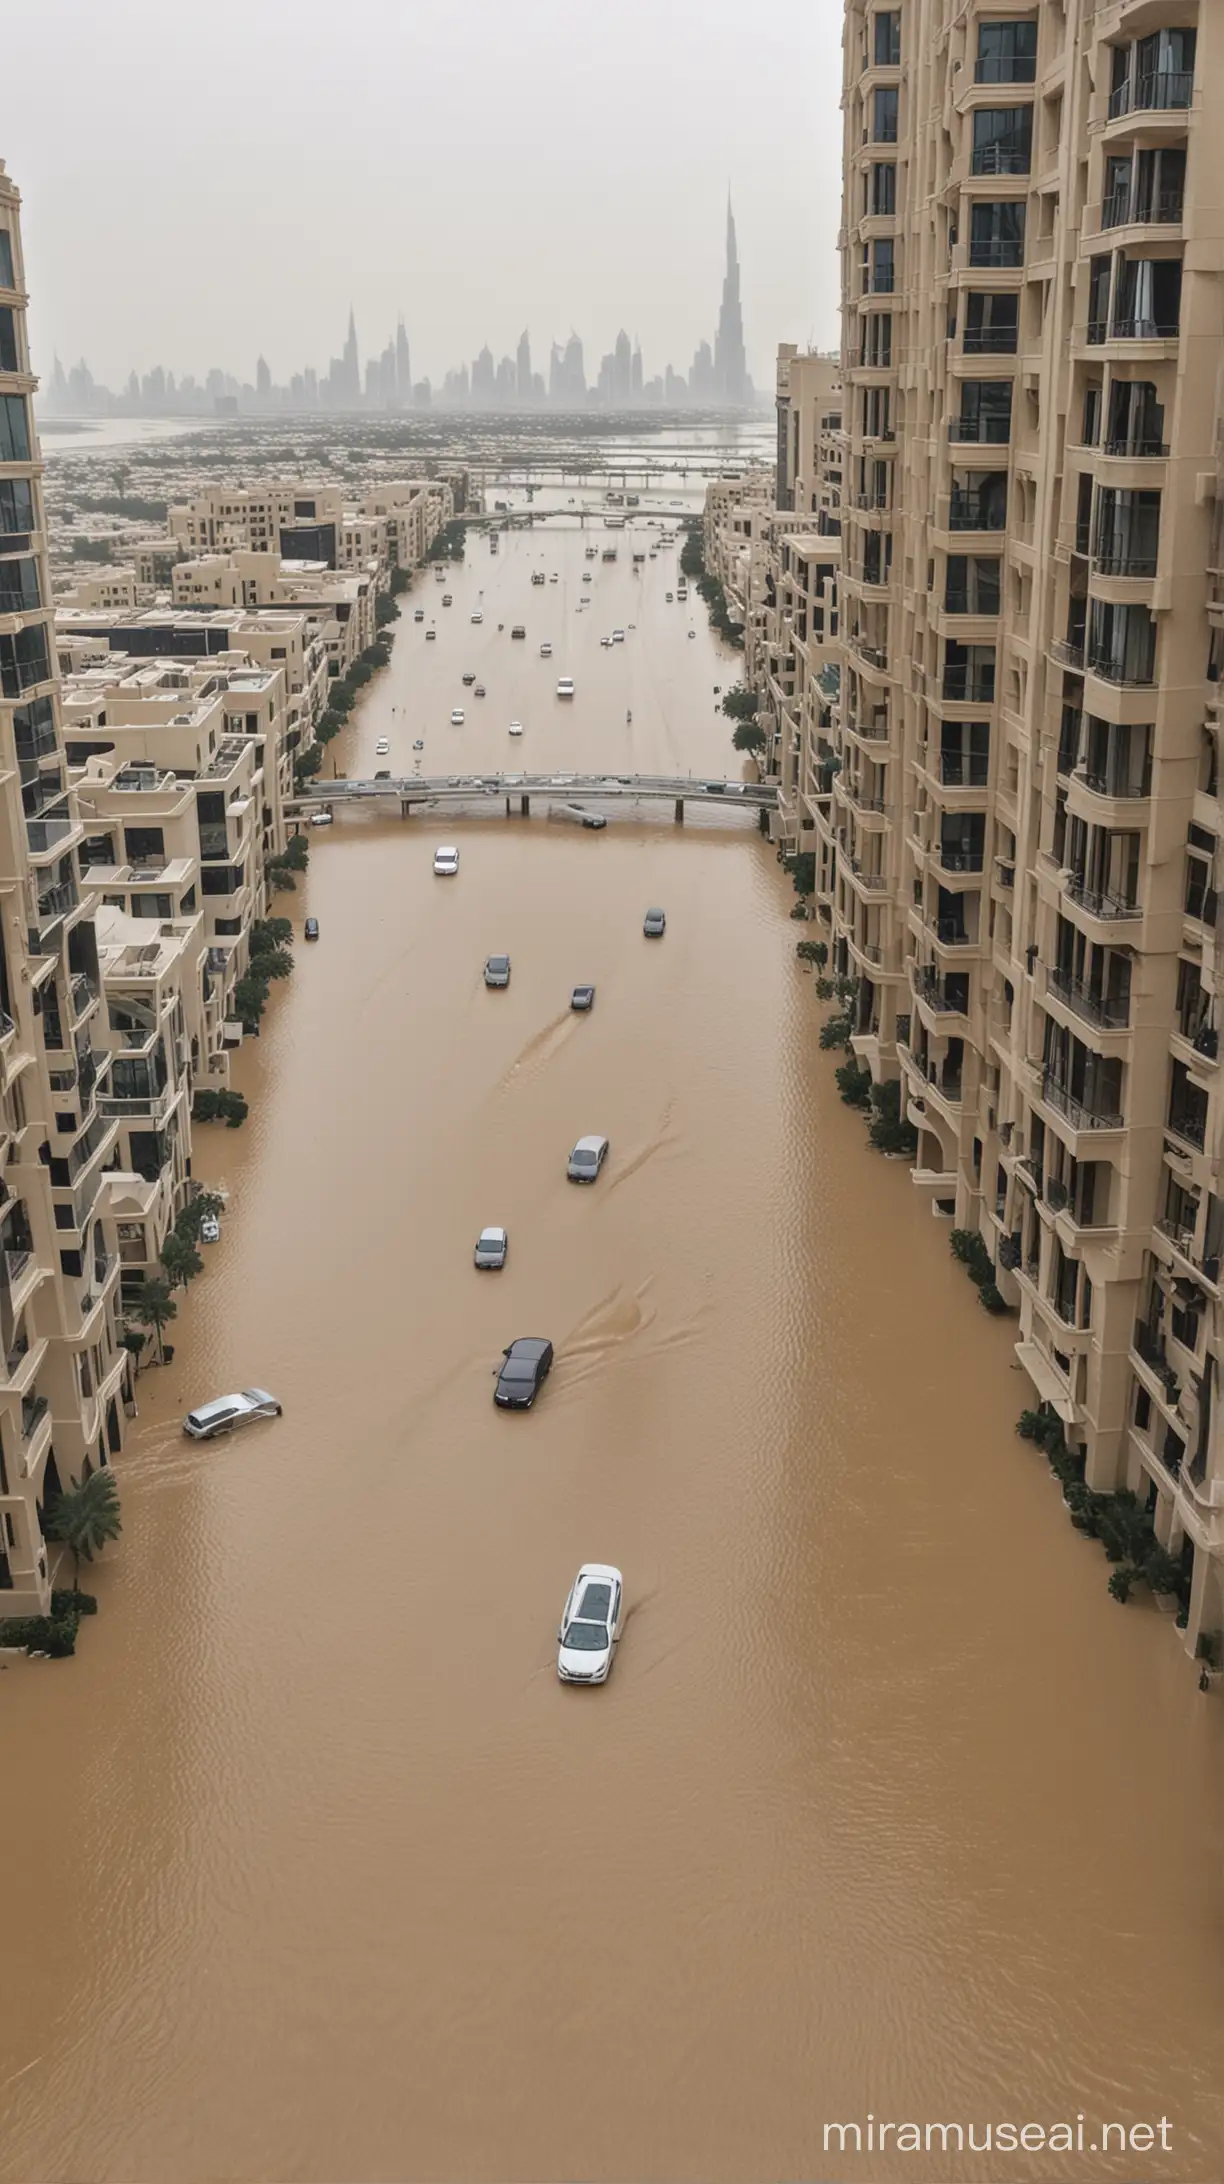 floods in Dubai, rain, luxury buildings, bridges, cars